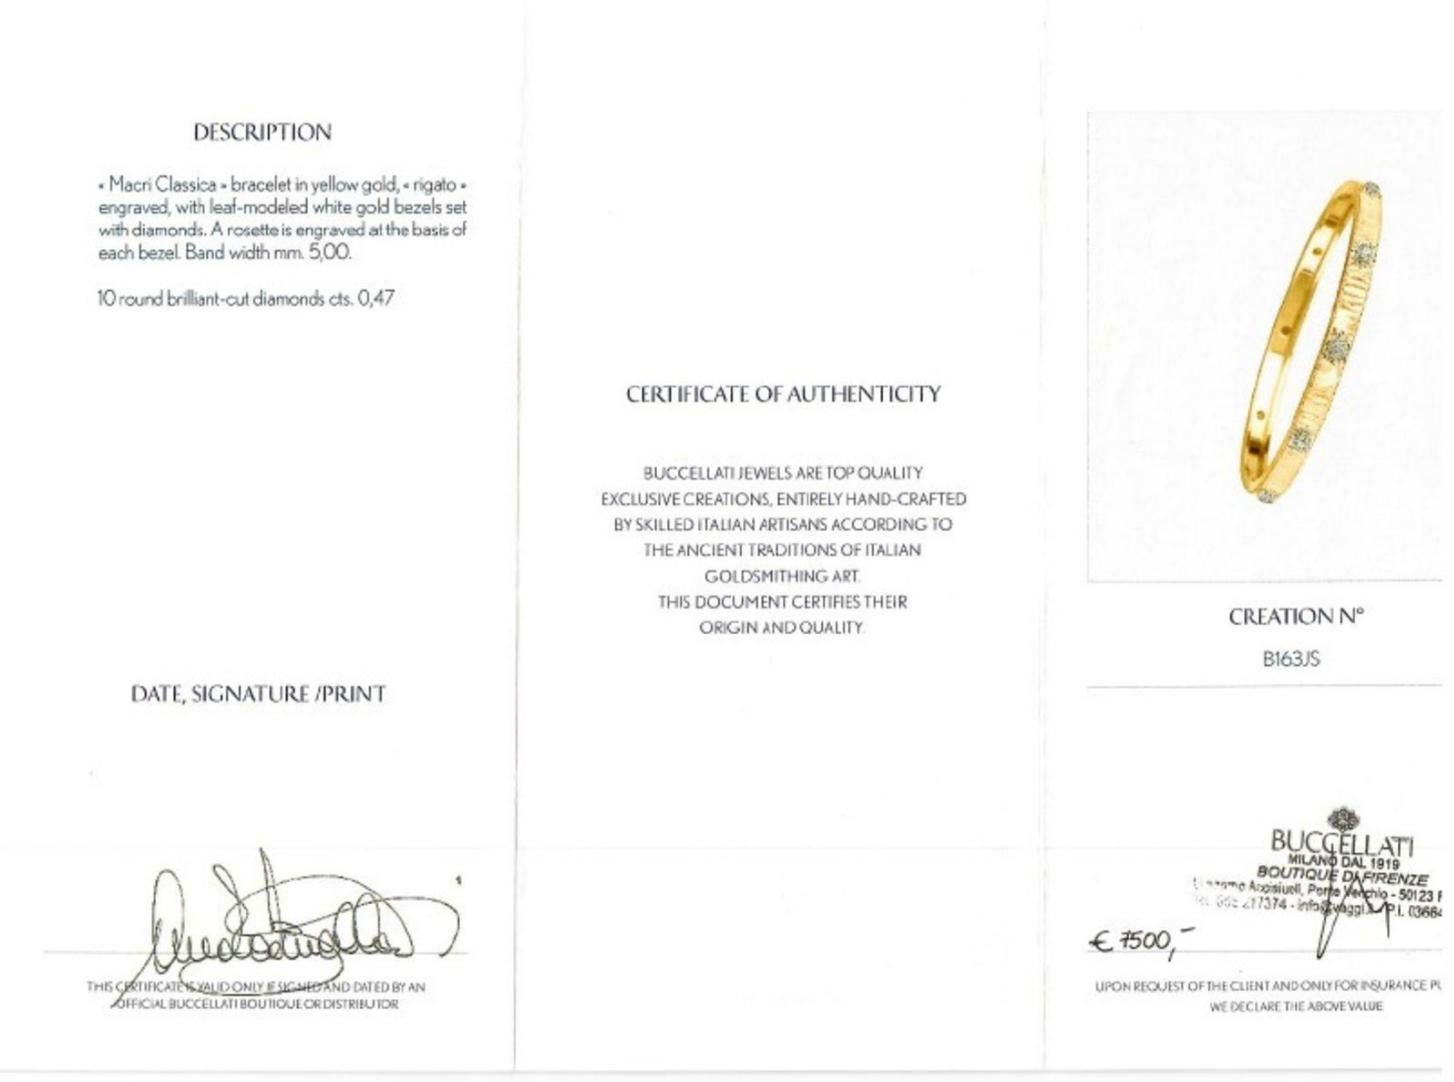 Contemporary Buccellati 18k Yellow Gold and Diamond 'Marci Classica' Bangle Bracelet